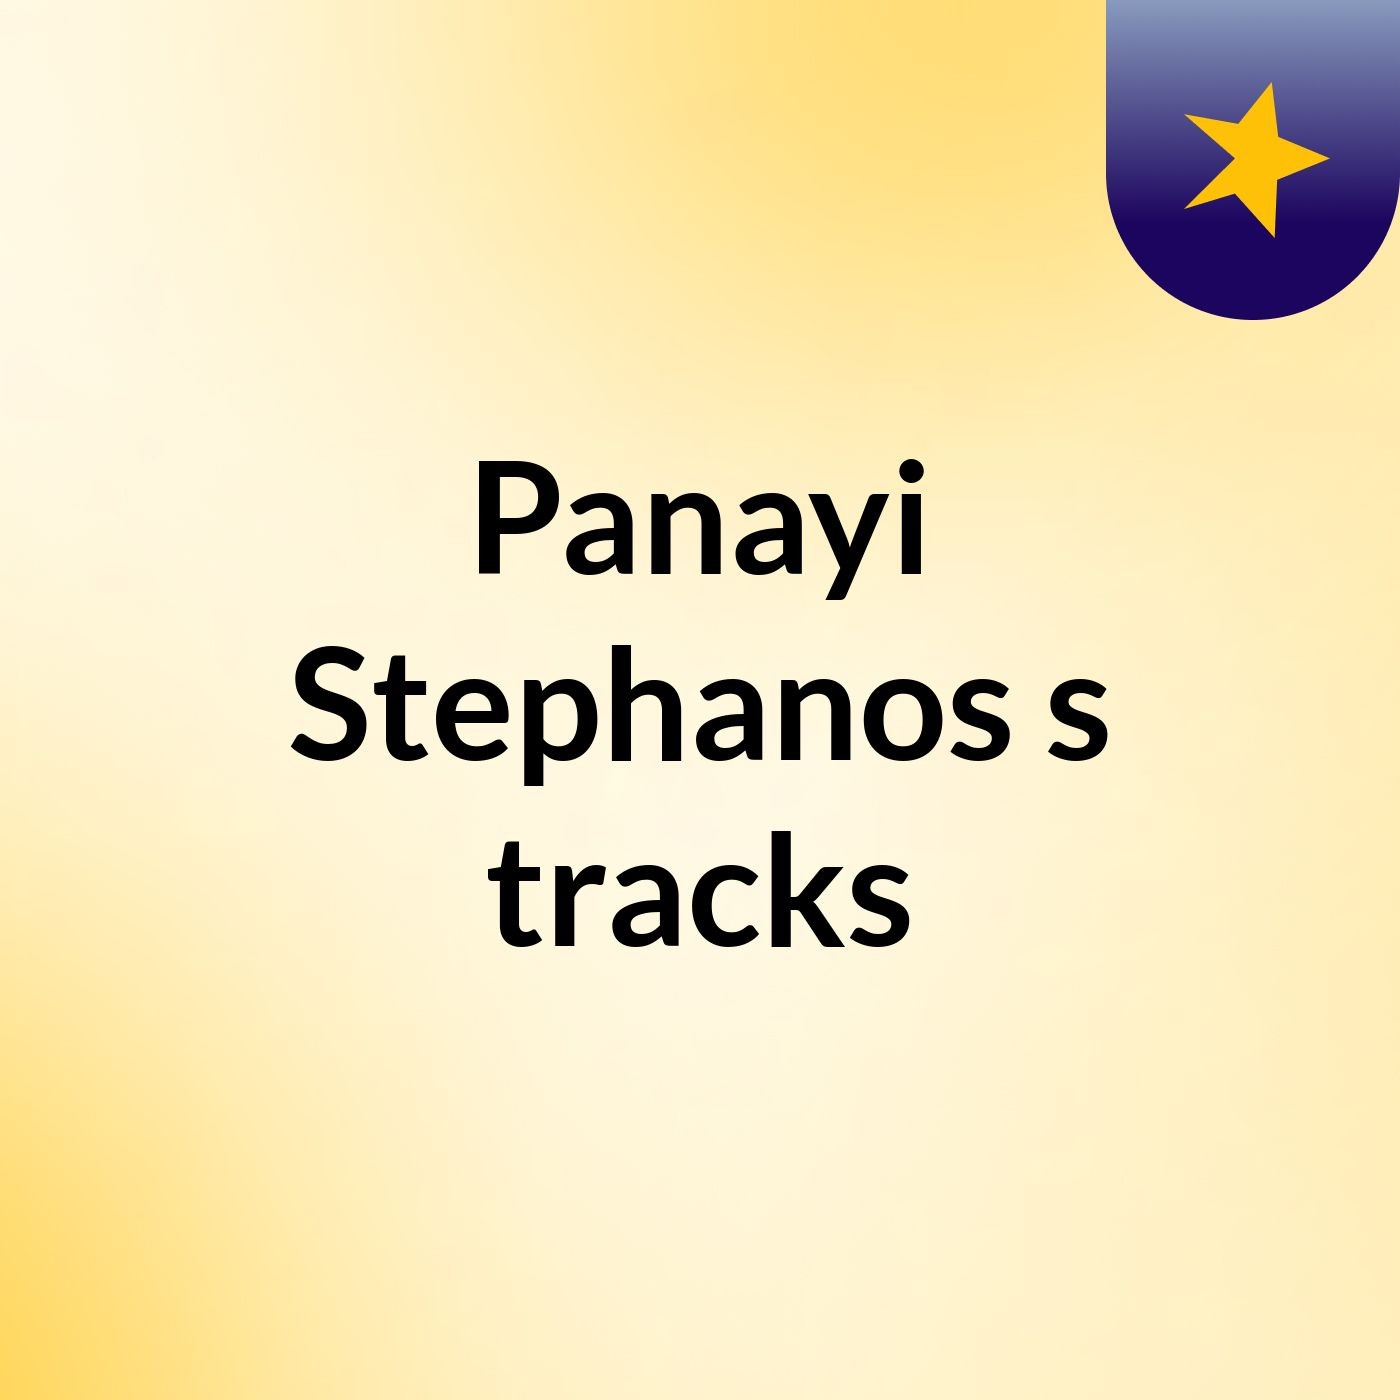 Panayi Stephanos's tracks